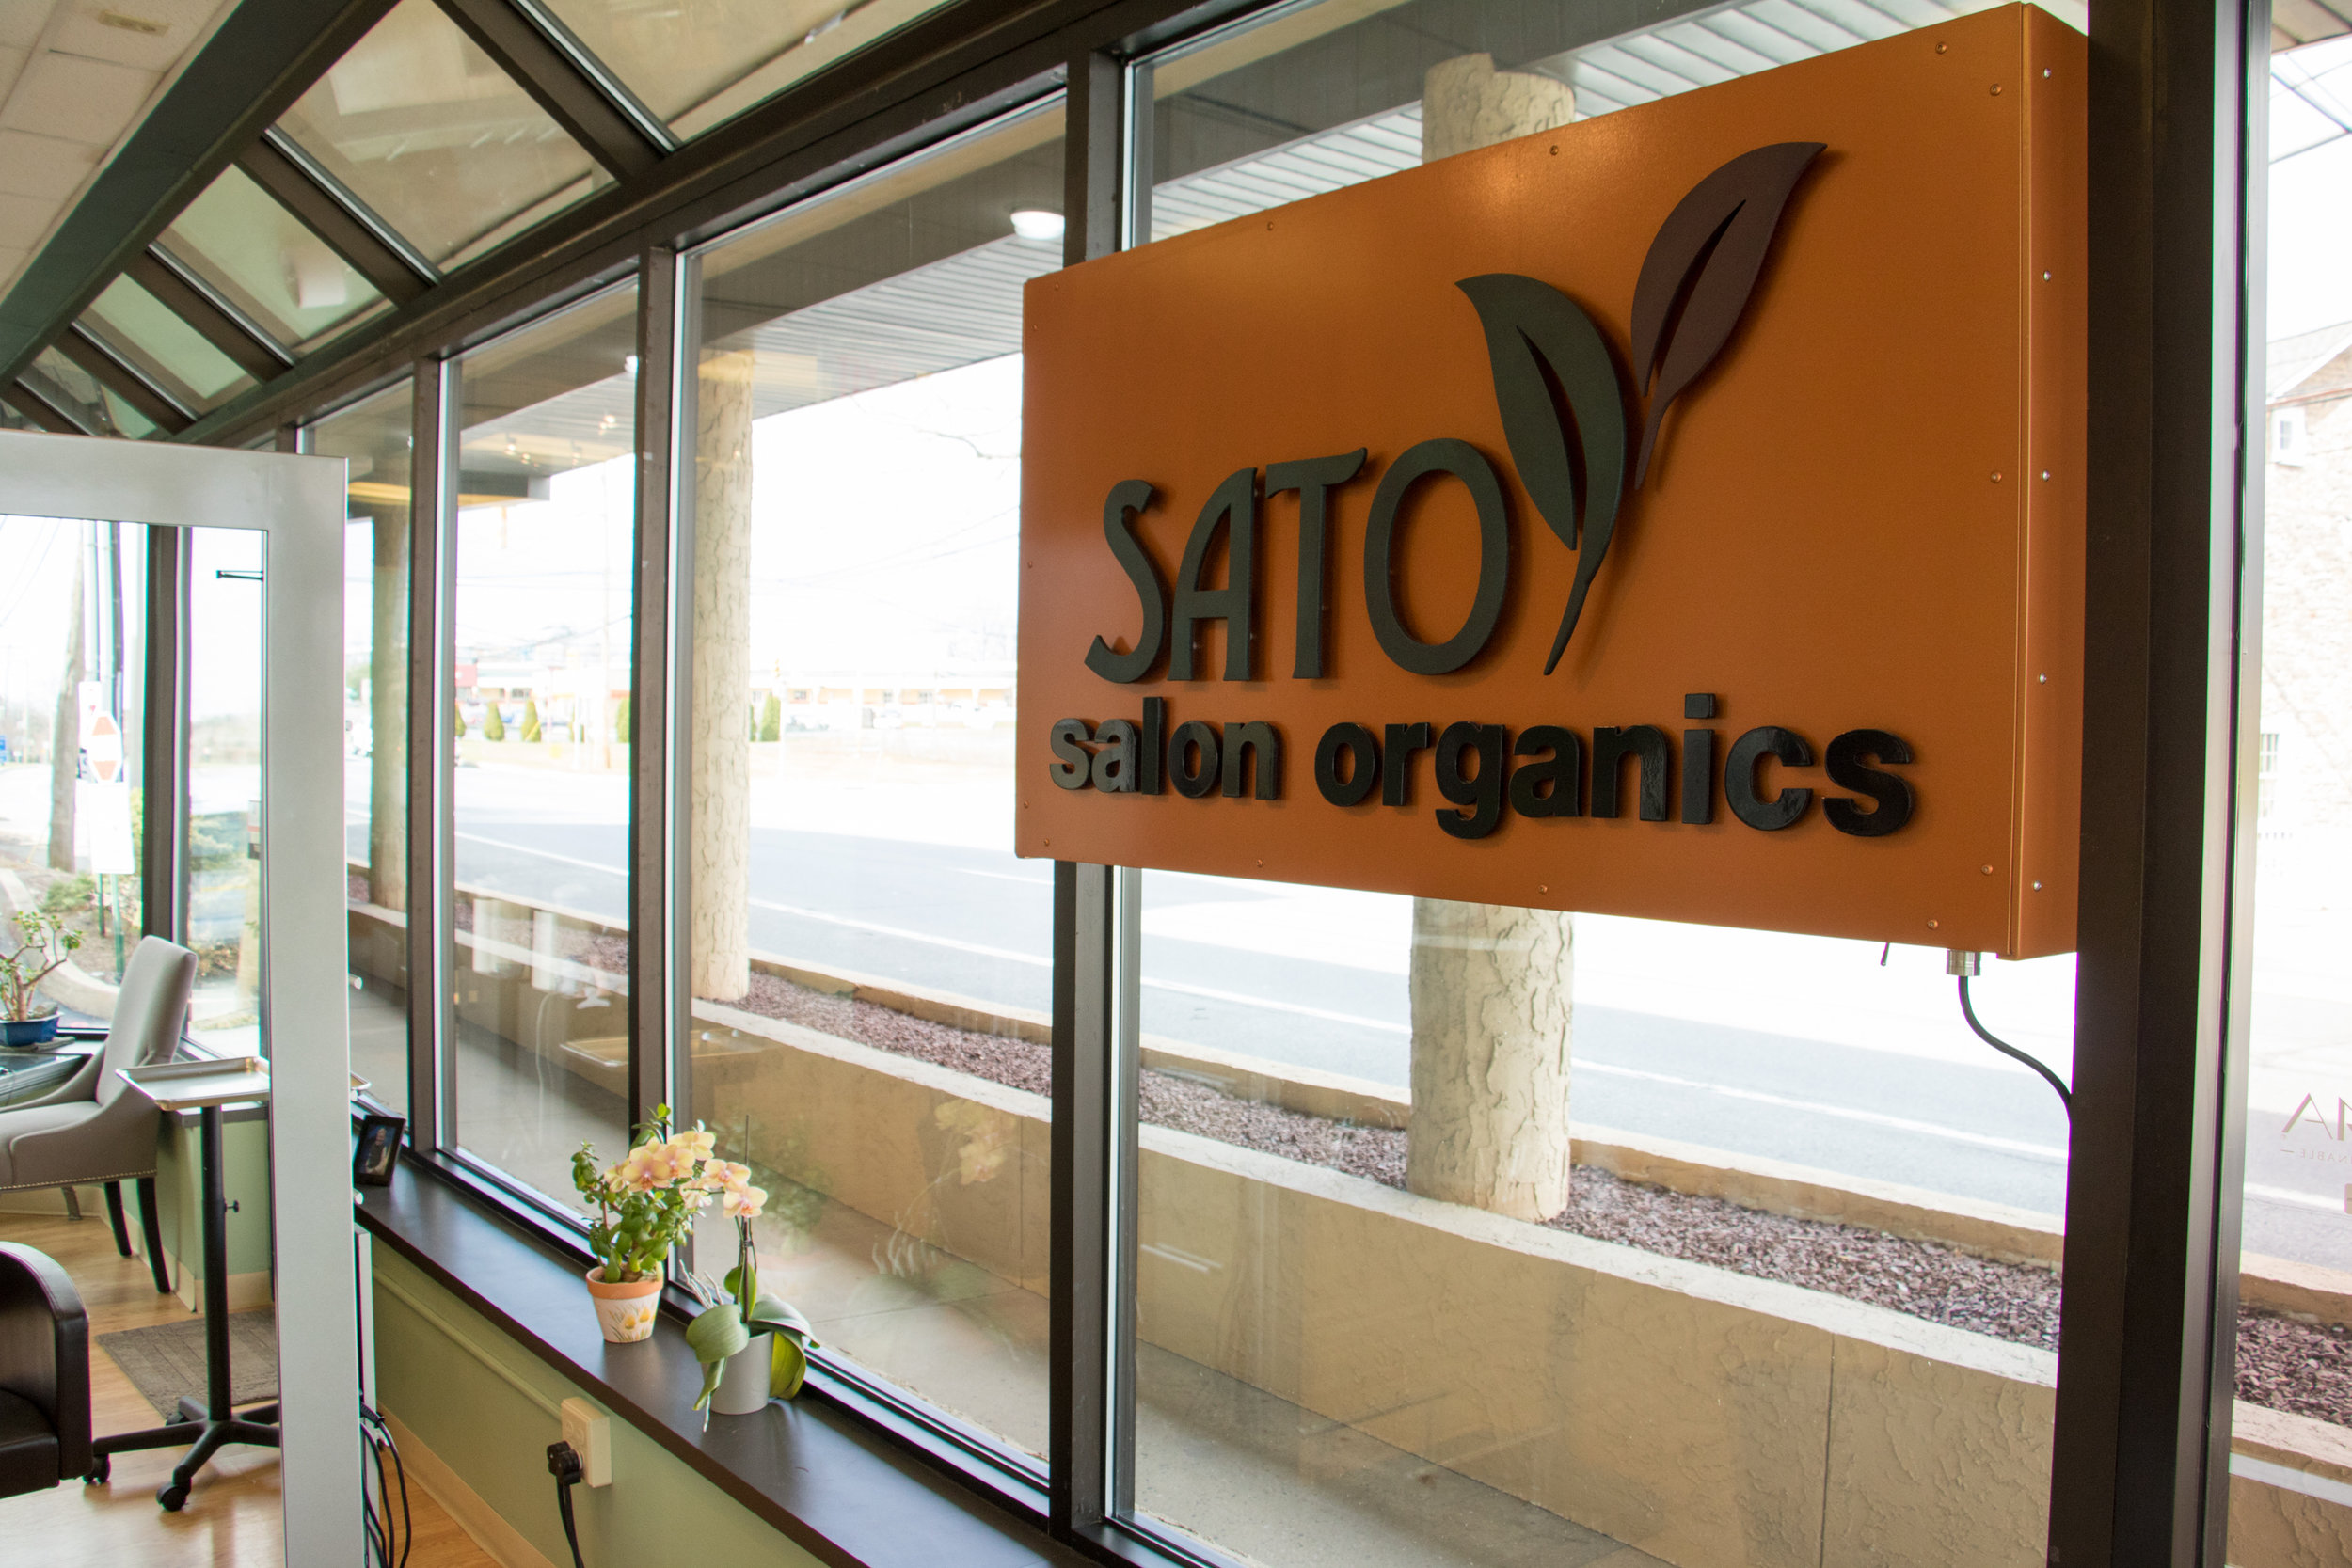 Sato Salon Organics